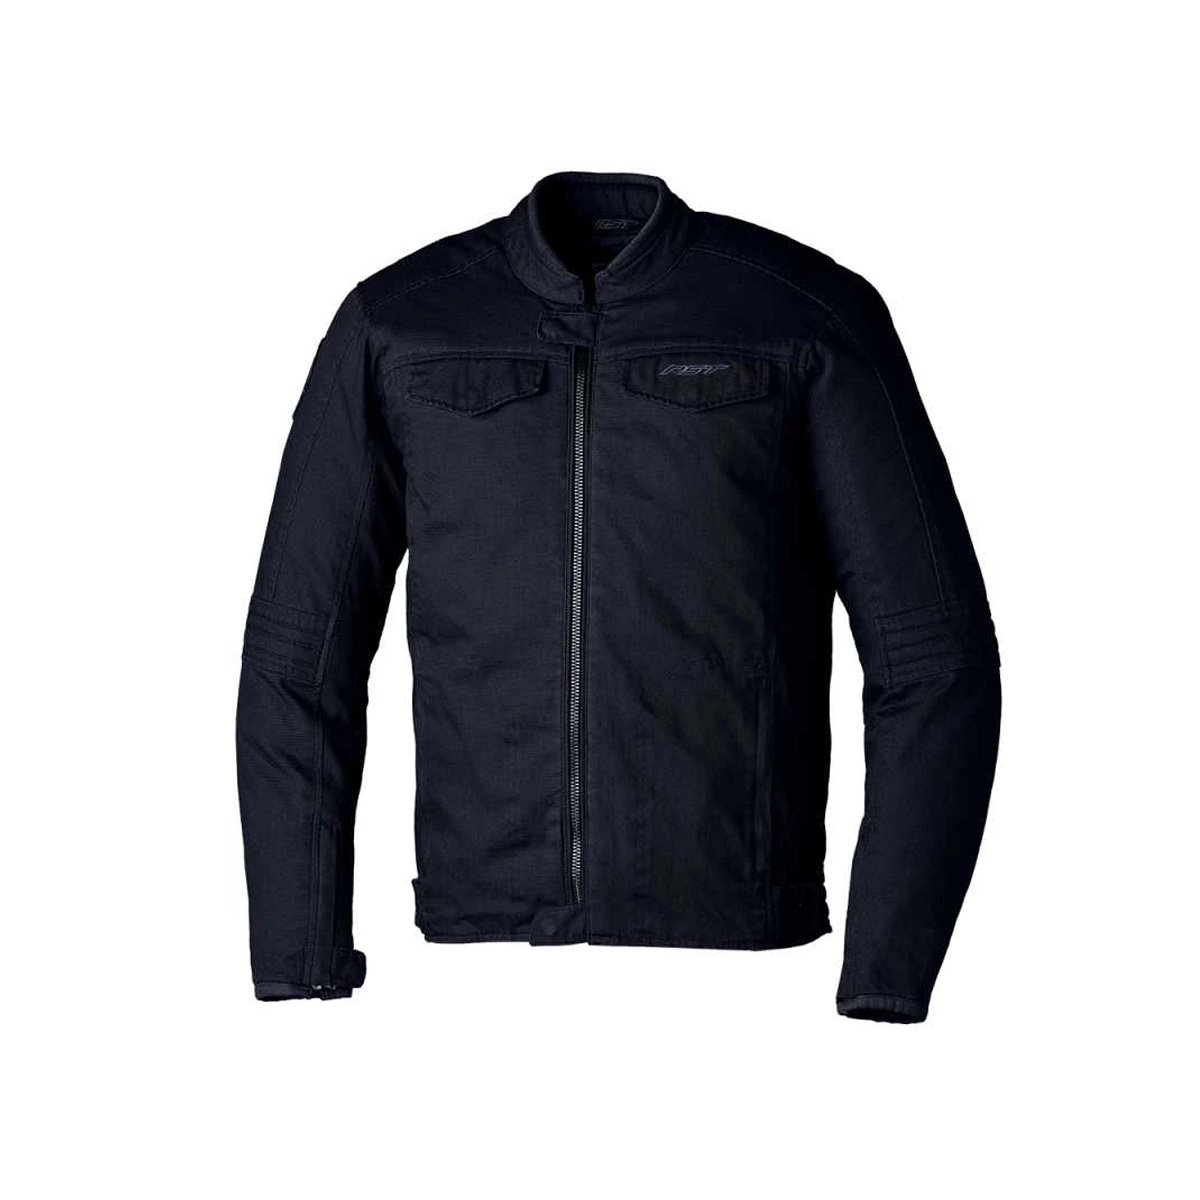 Image of RST IOM TT Crosby 2 CE Textile Jacket Men Black Size 48 ID 5056558112233